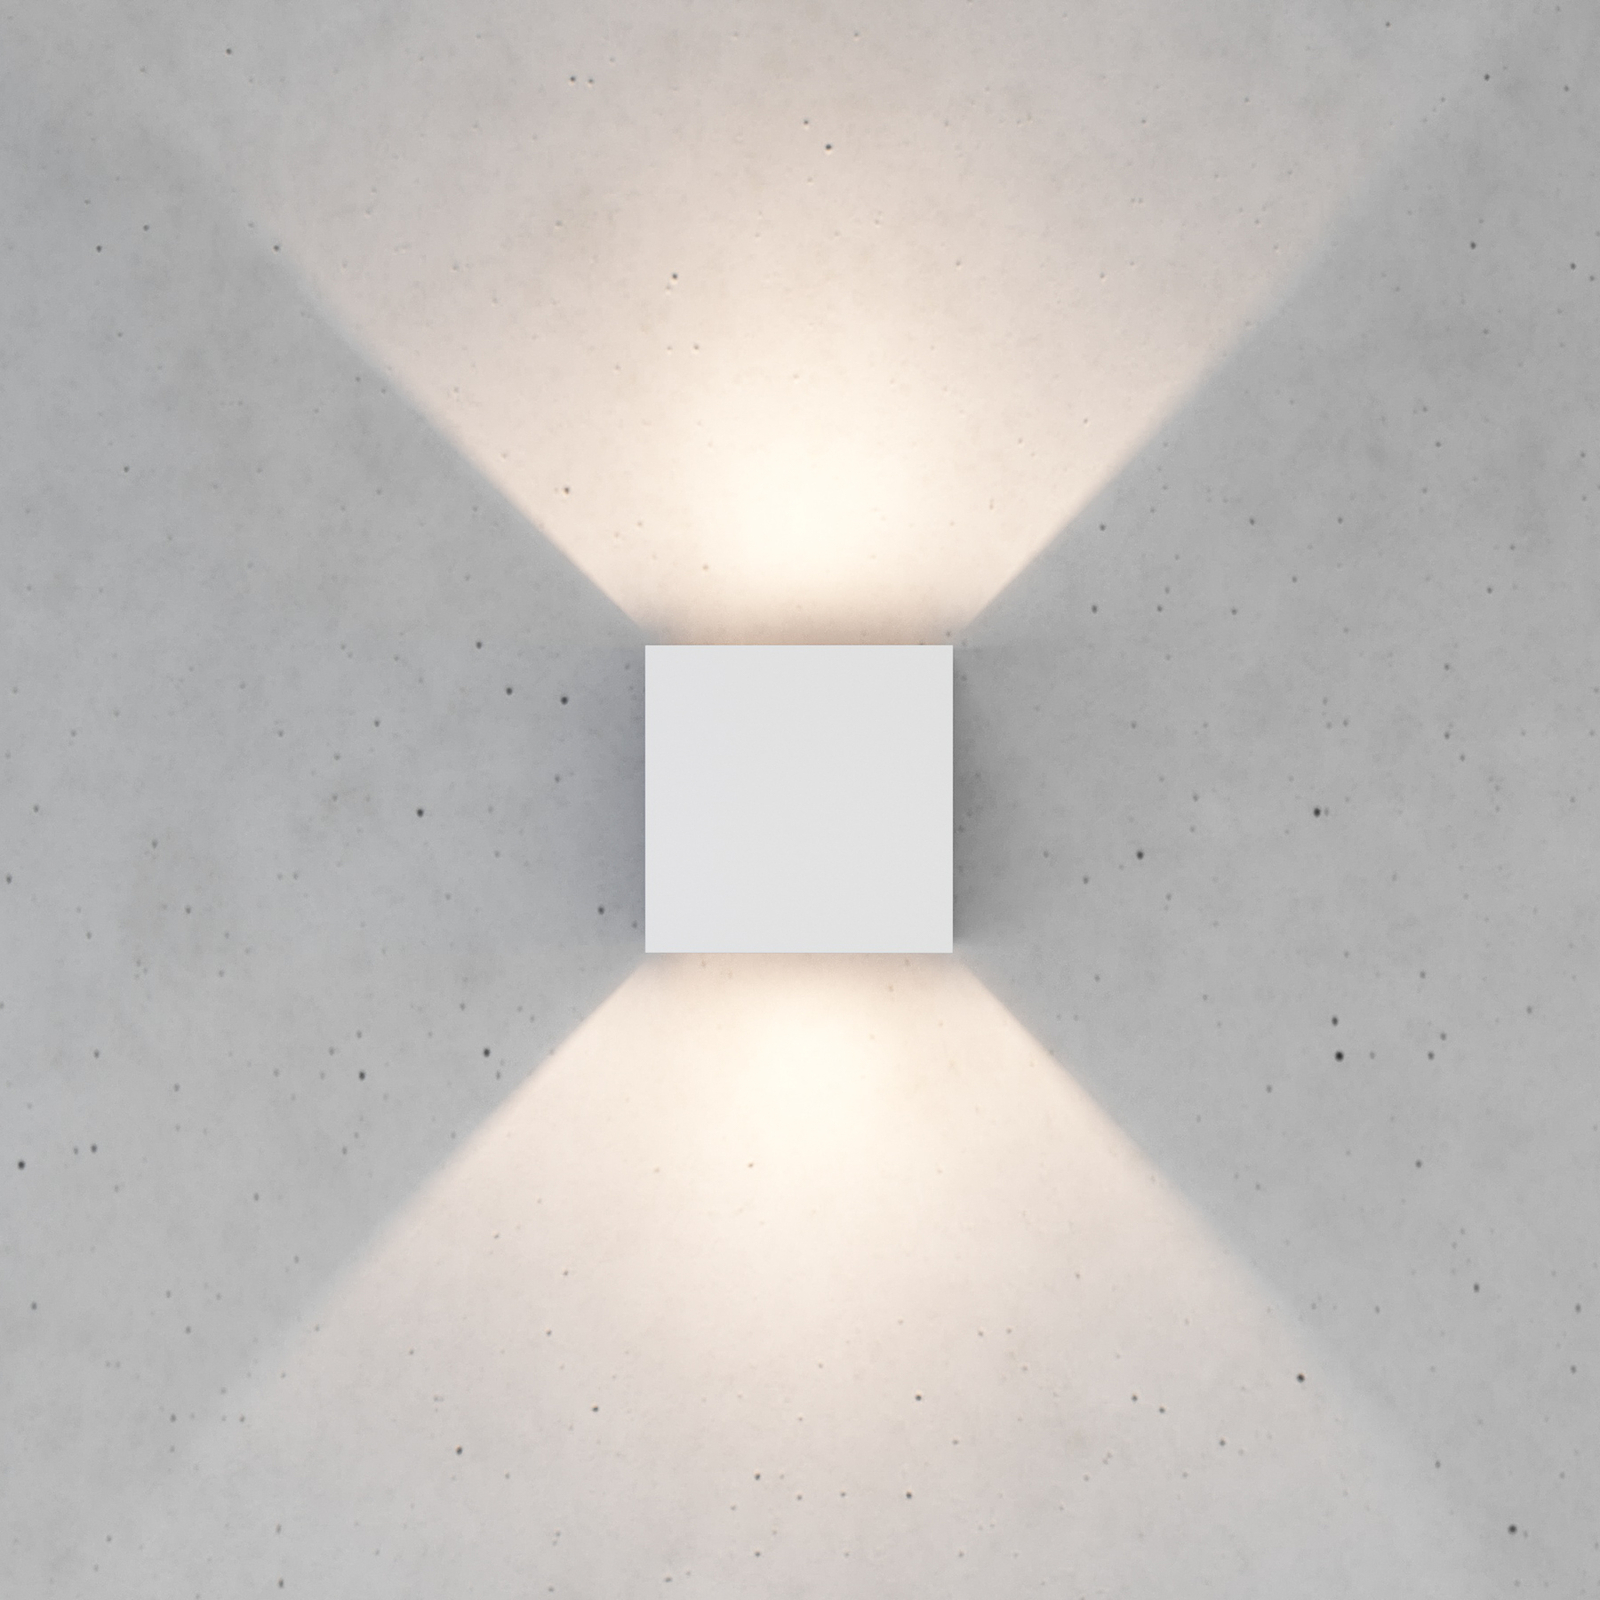 Zuza 2 wall light, white, metal, four blades, 10 cm, G9